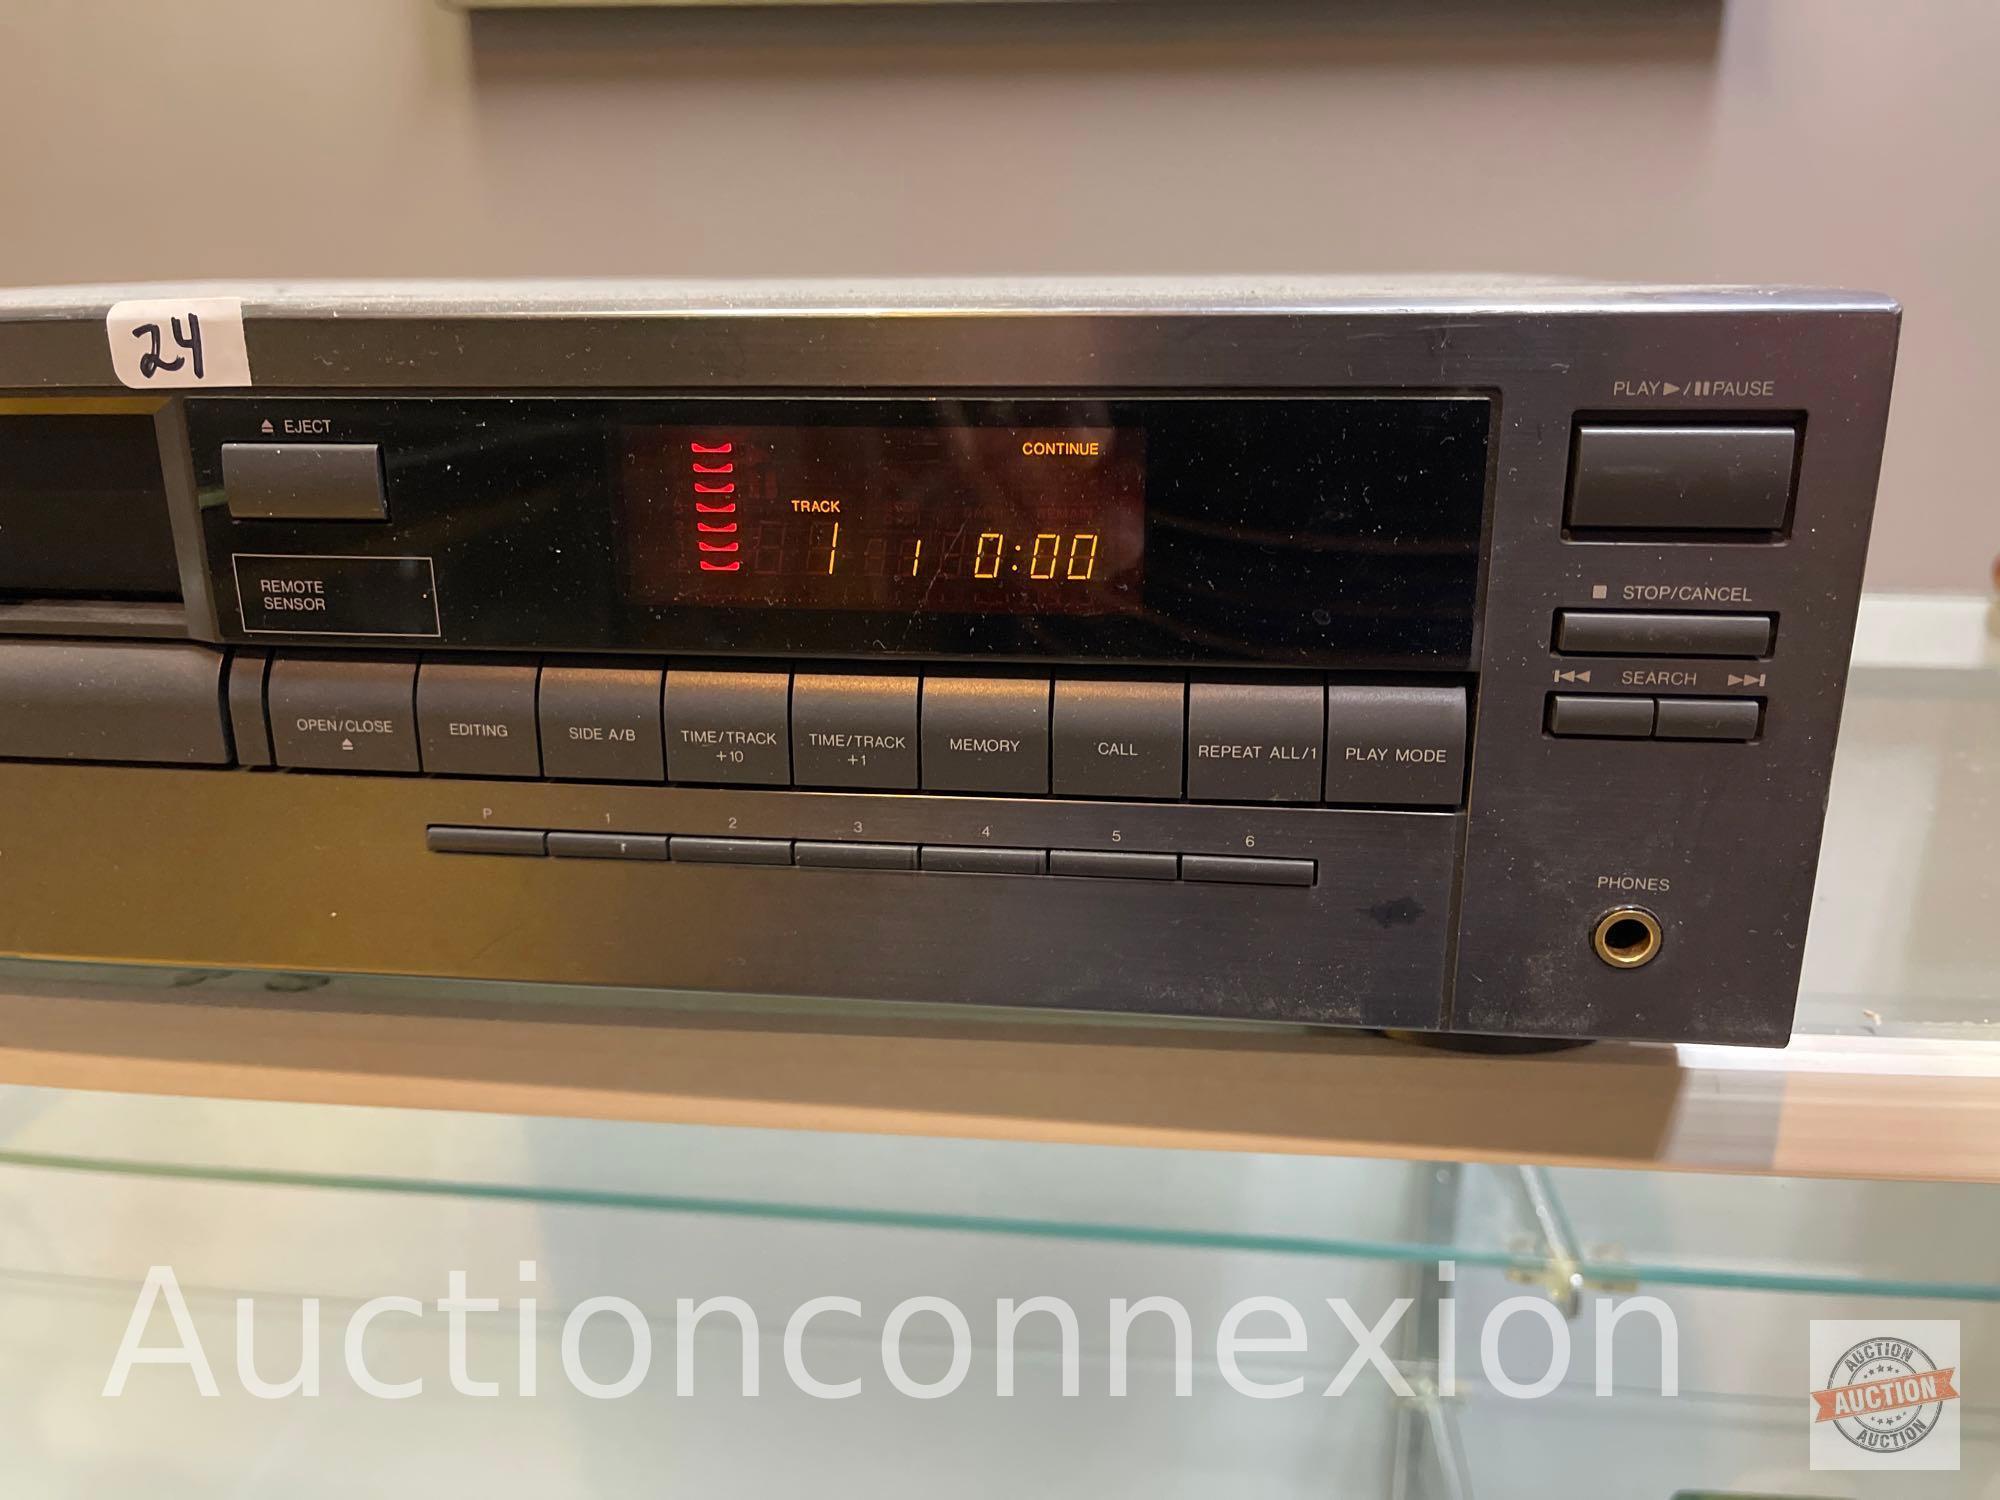 Electronics - JVC compact Disc Player, 6 disc magazine slot, model XL-M505